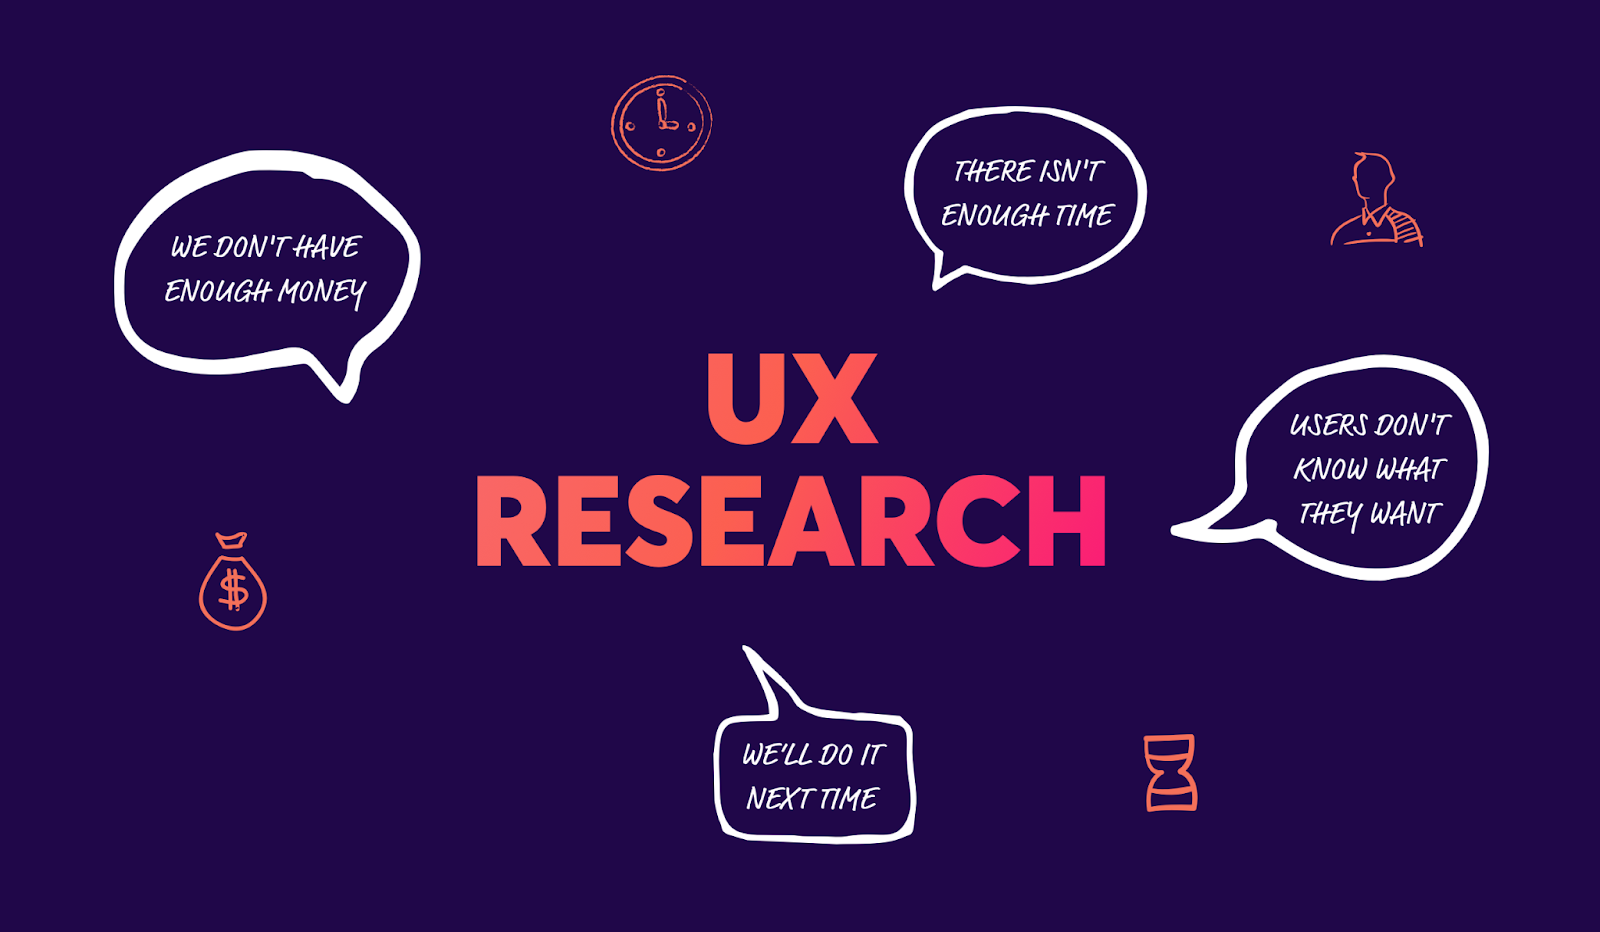 Como vender pesquisa de UX?